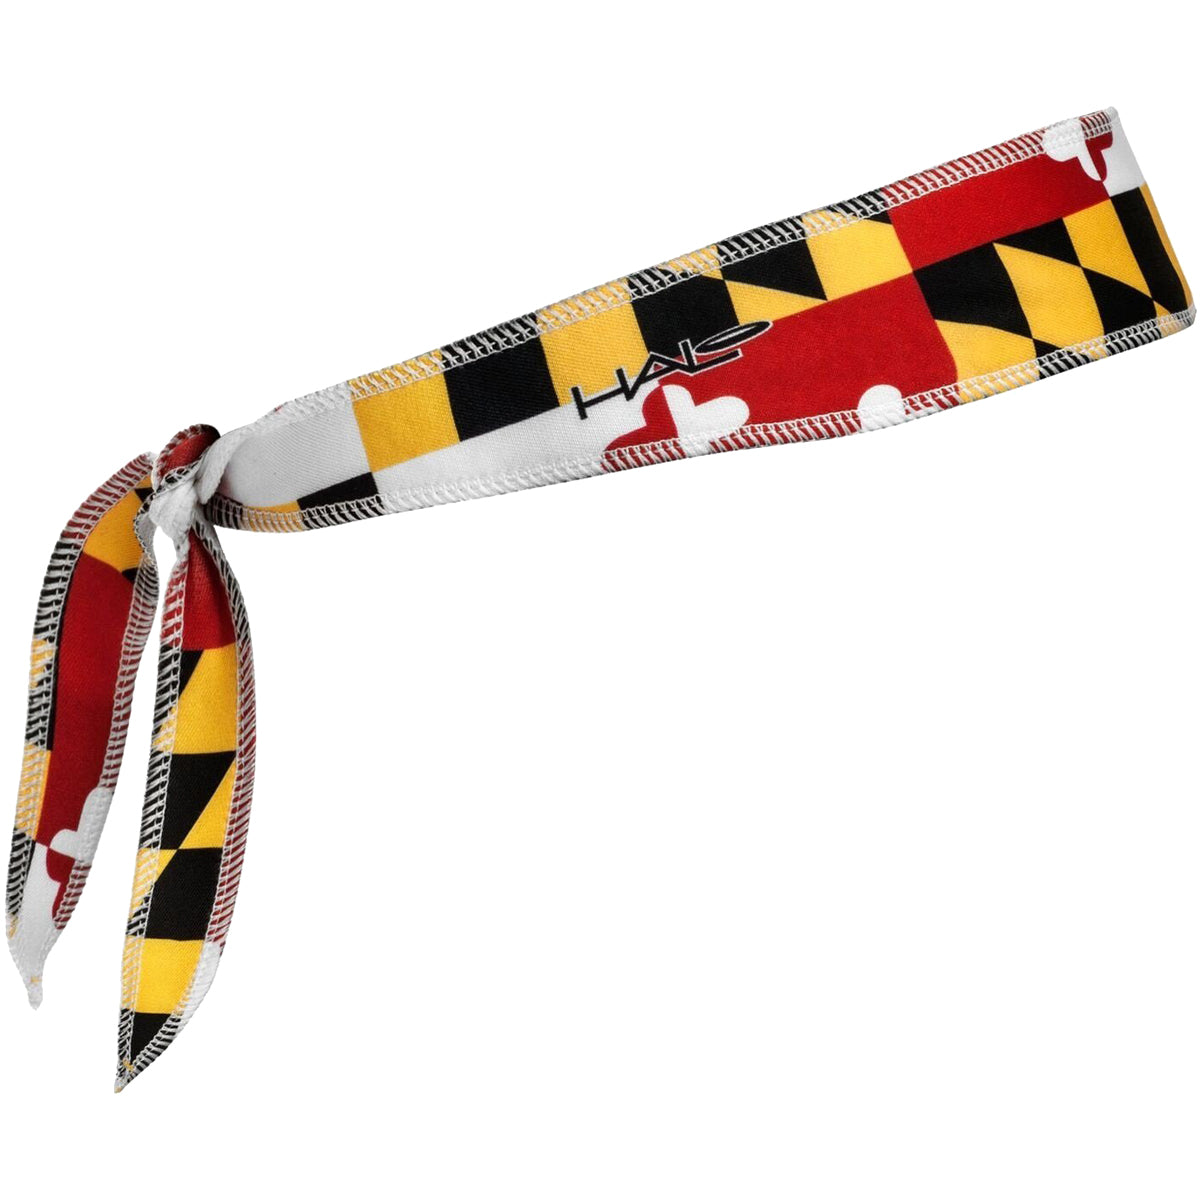 Halo Headband Tie Version I Sweatband - Maryland Flag Halo